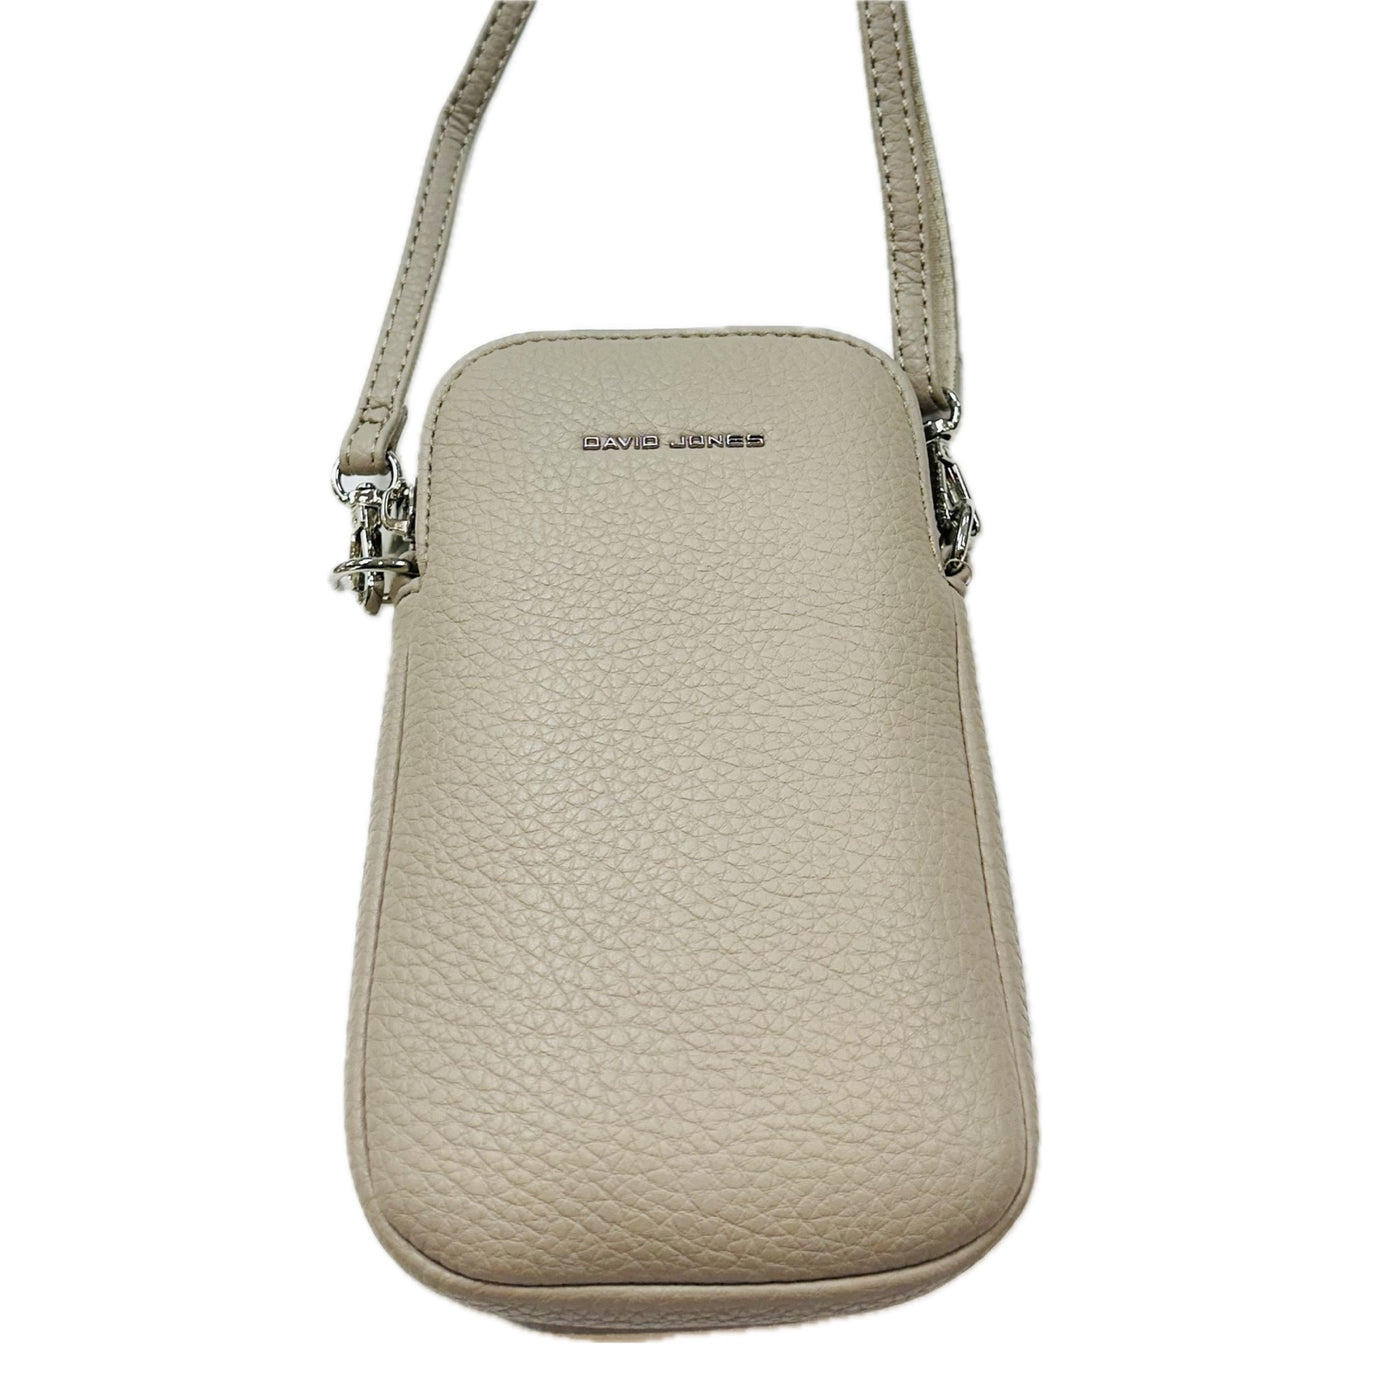 David Jones Phone Crossbody Handbag - Gravel (Silver fittings)